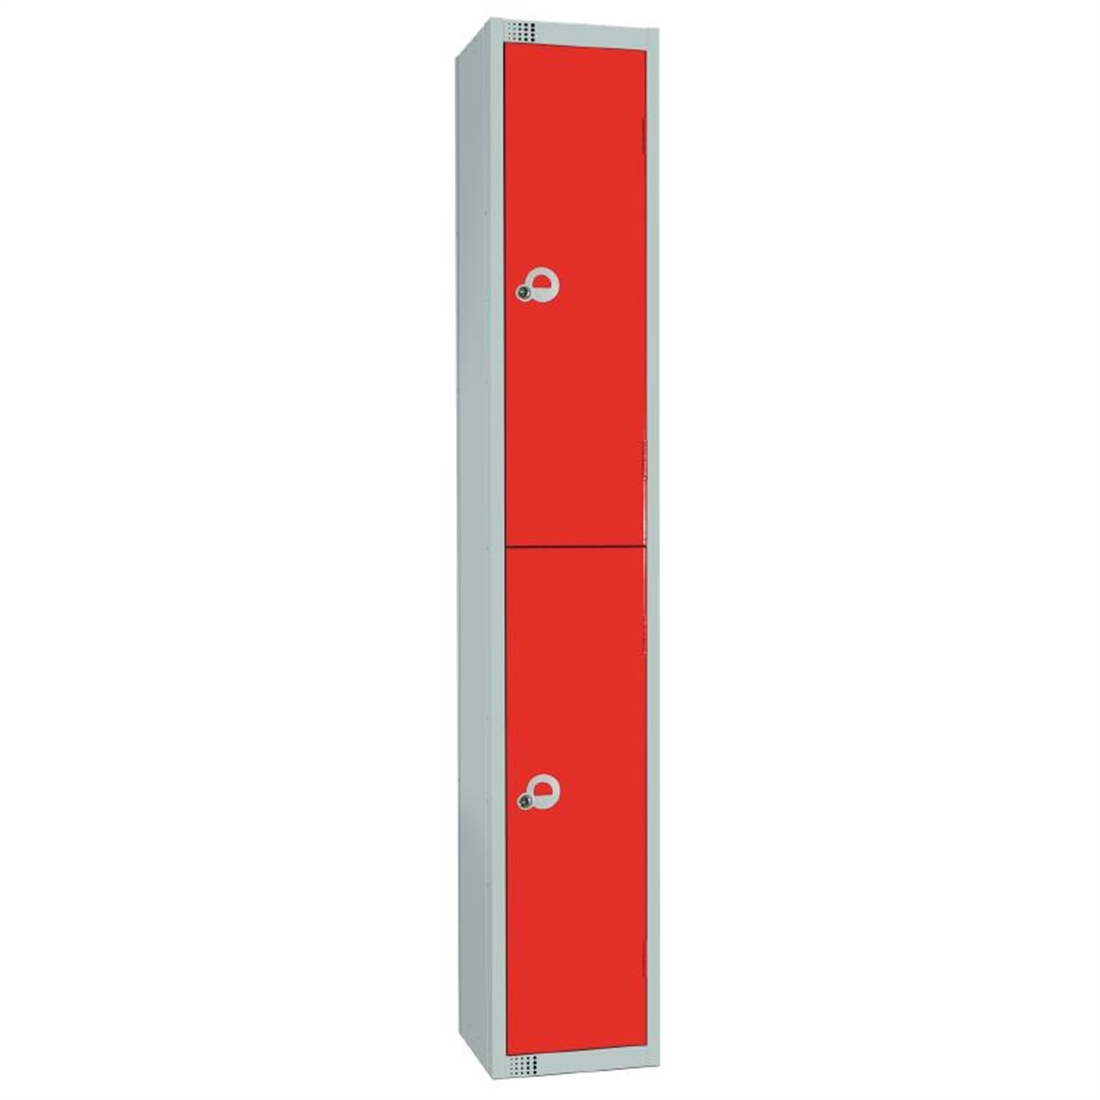 Elite Double Door Coin Return Locker with Sloping Top Graphite Red